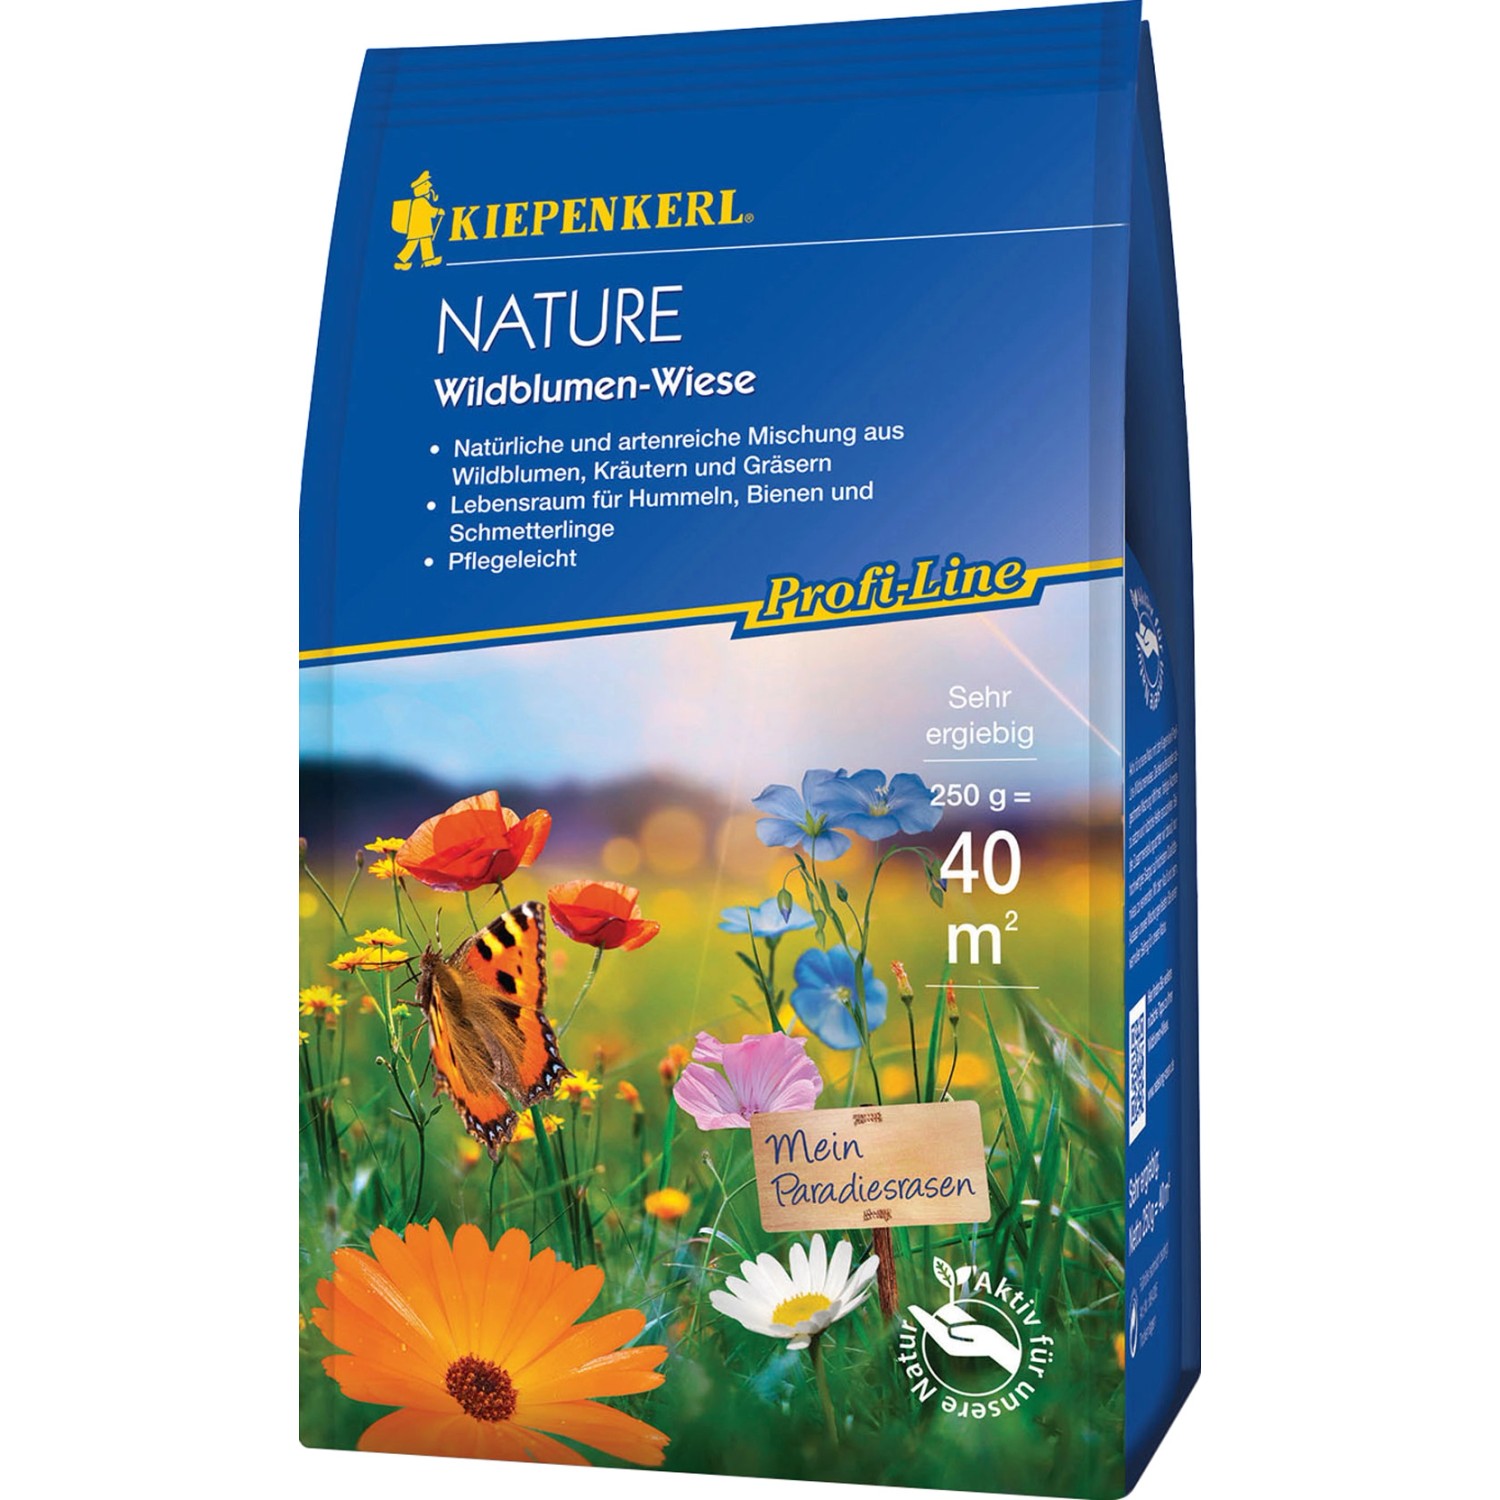 Kiepenkerl Wildblumen-Wiese Profi-Line  Nature 250 g